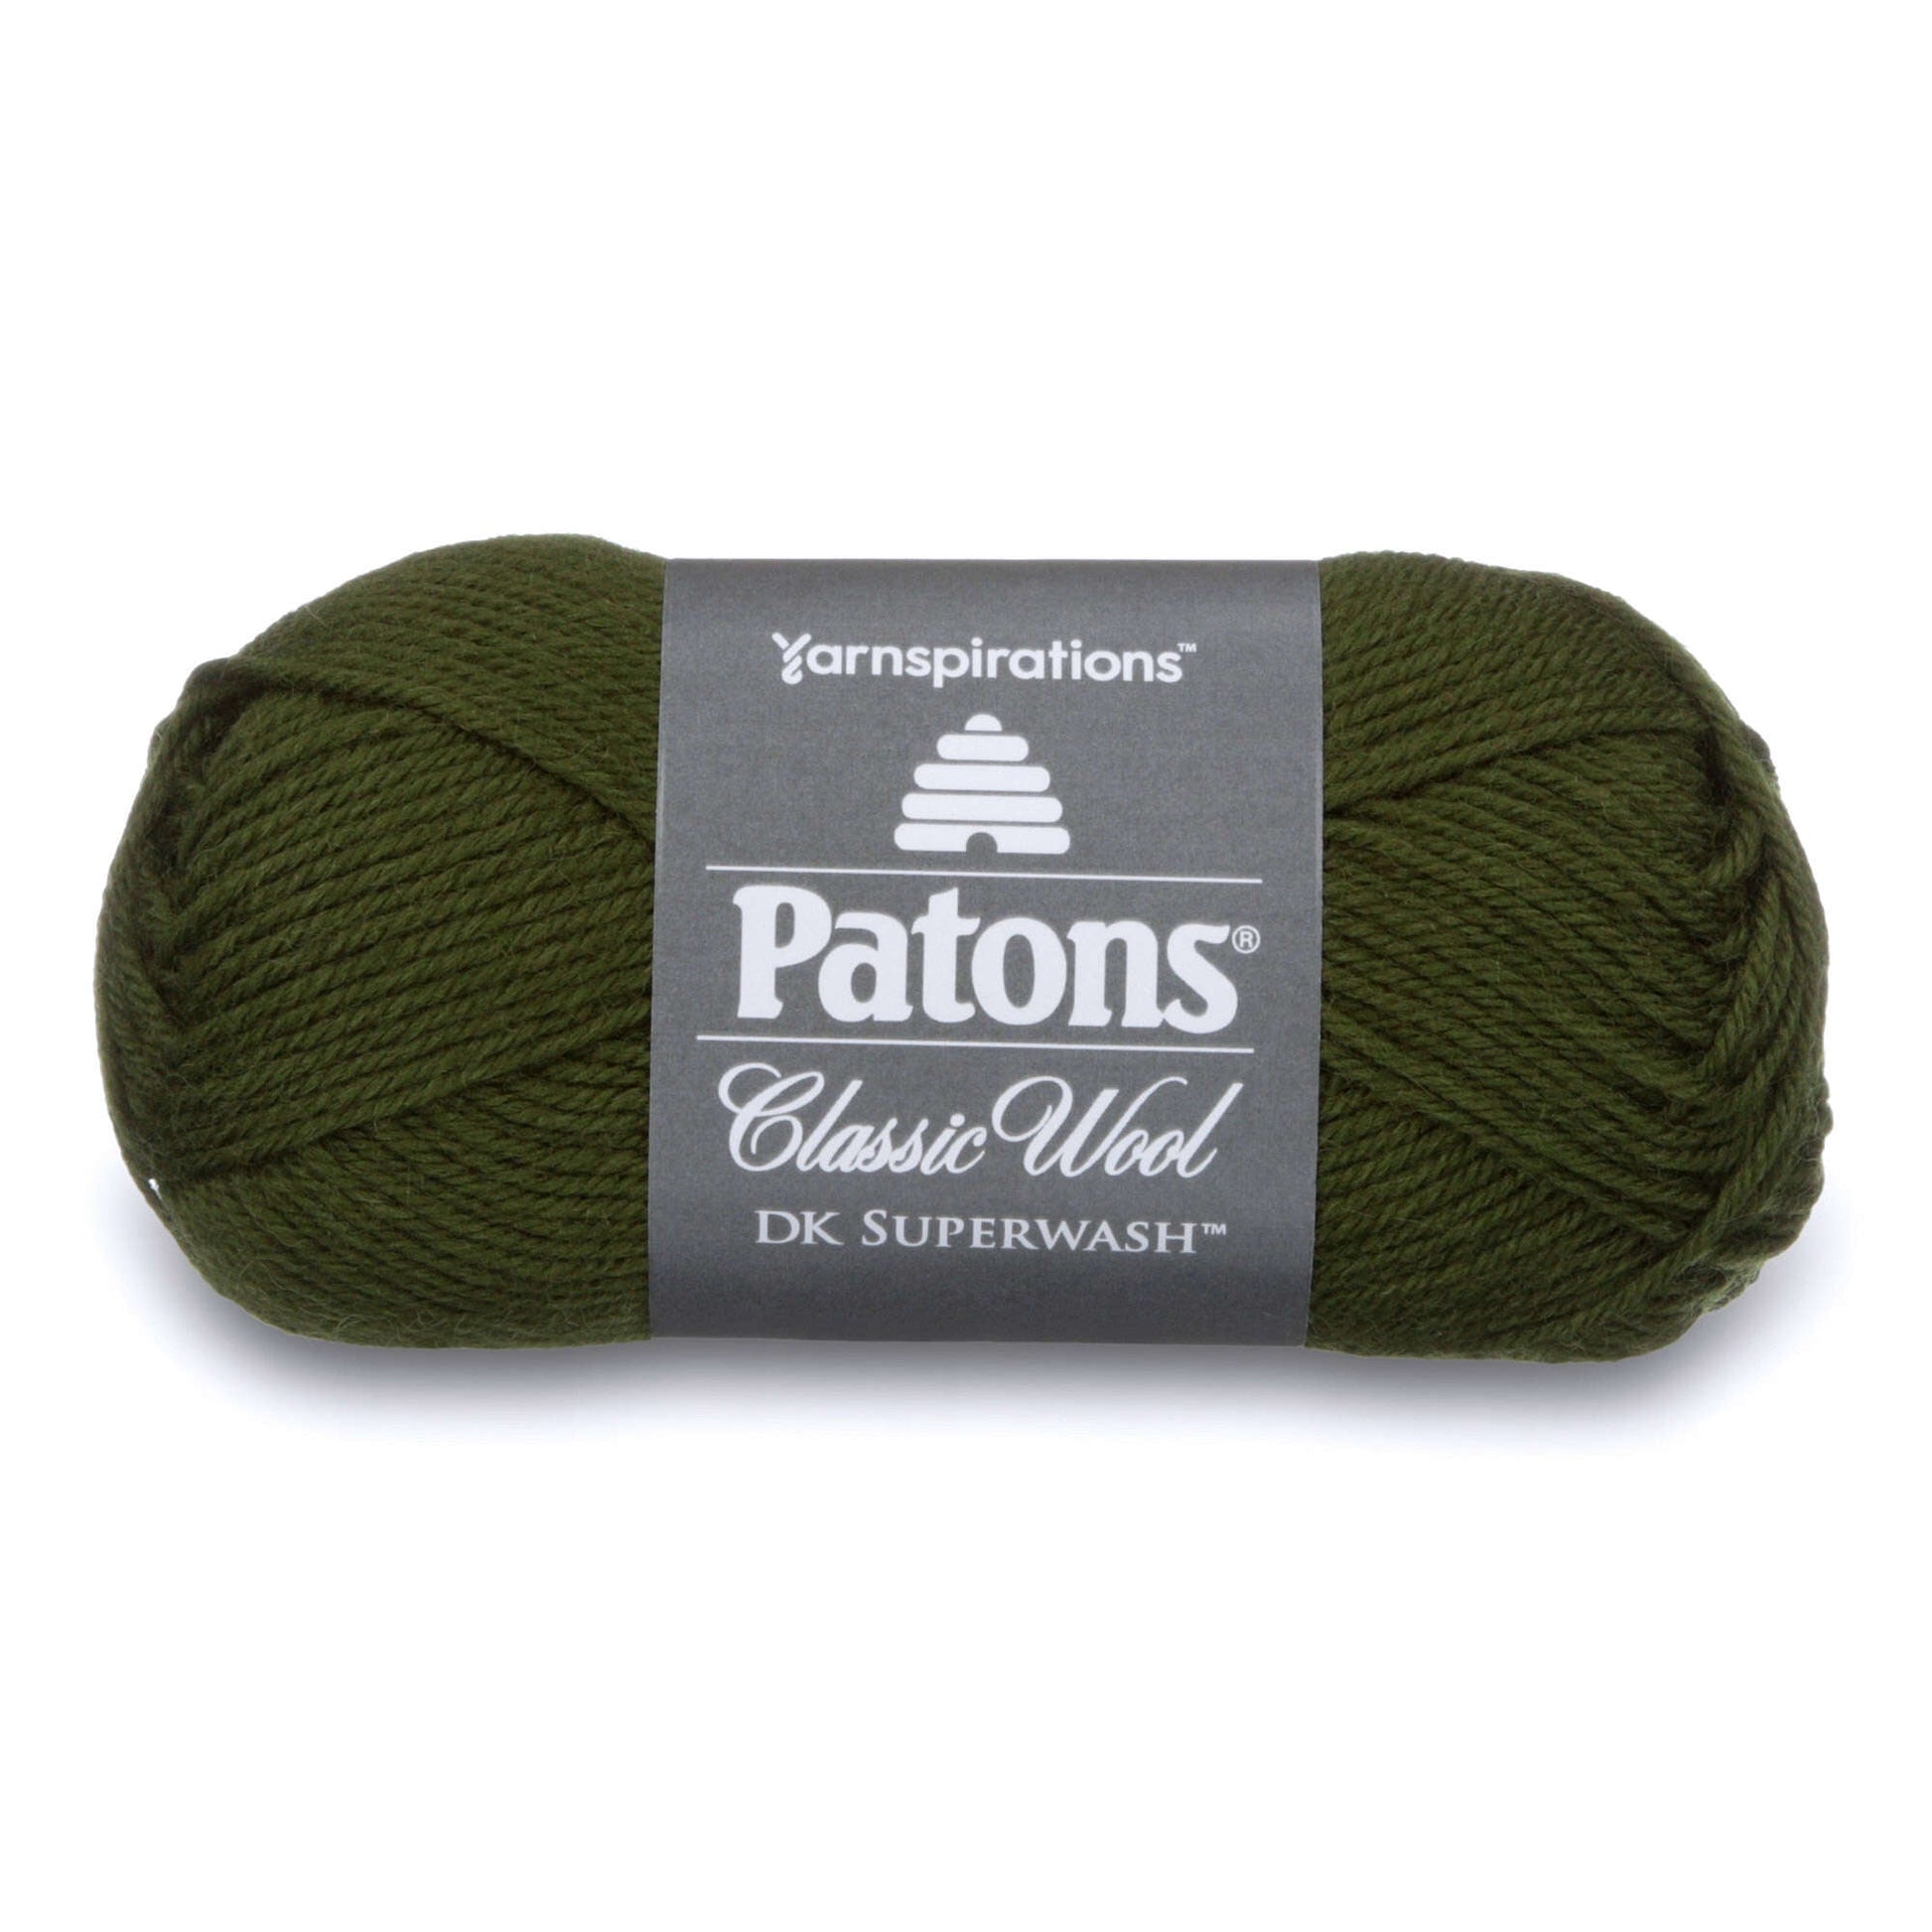 Patons Classic Wool DK Superwash Yarn